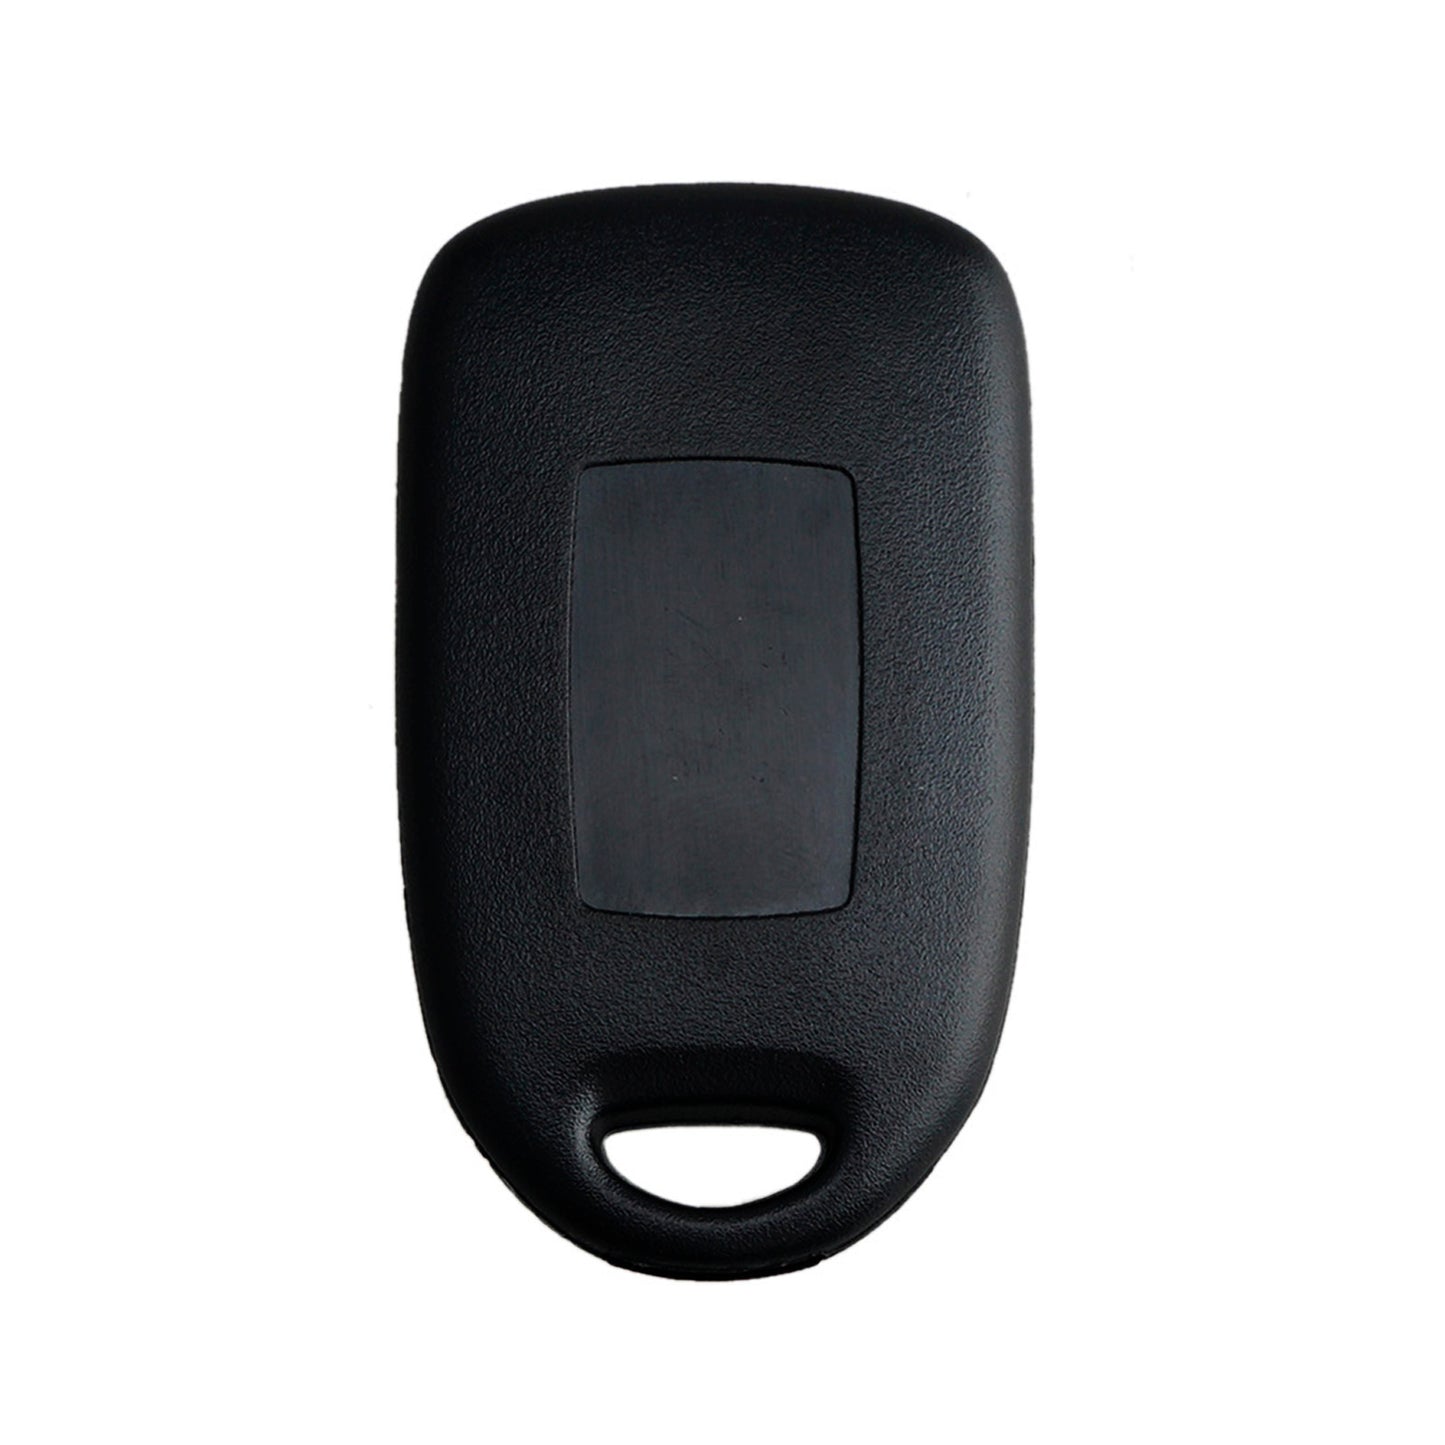 4 Buttons 315MHz Keyless Entry Fob Remote Car Key For 2003-2008 MAZDA RX8 6 626 FCC ID: KPU41805 SKU : J189